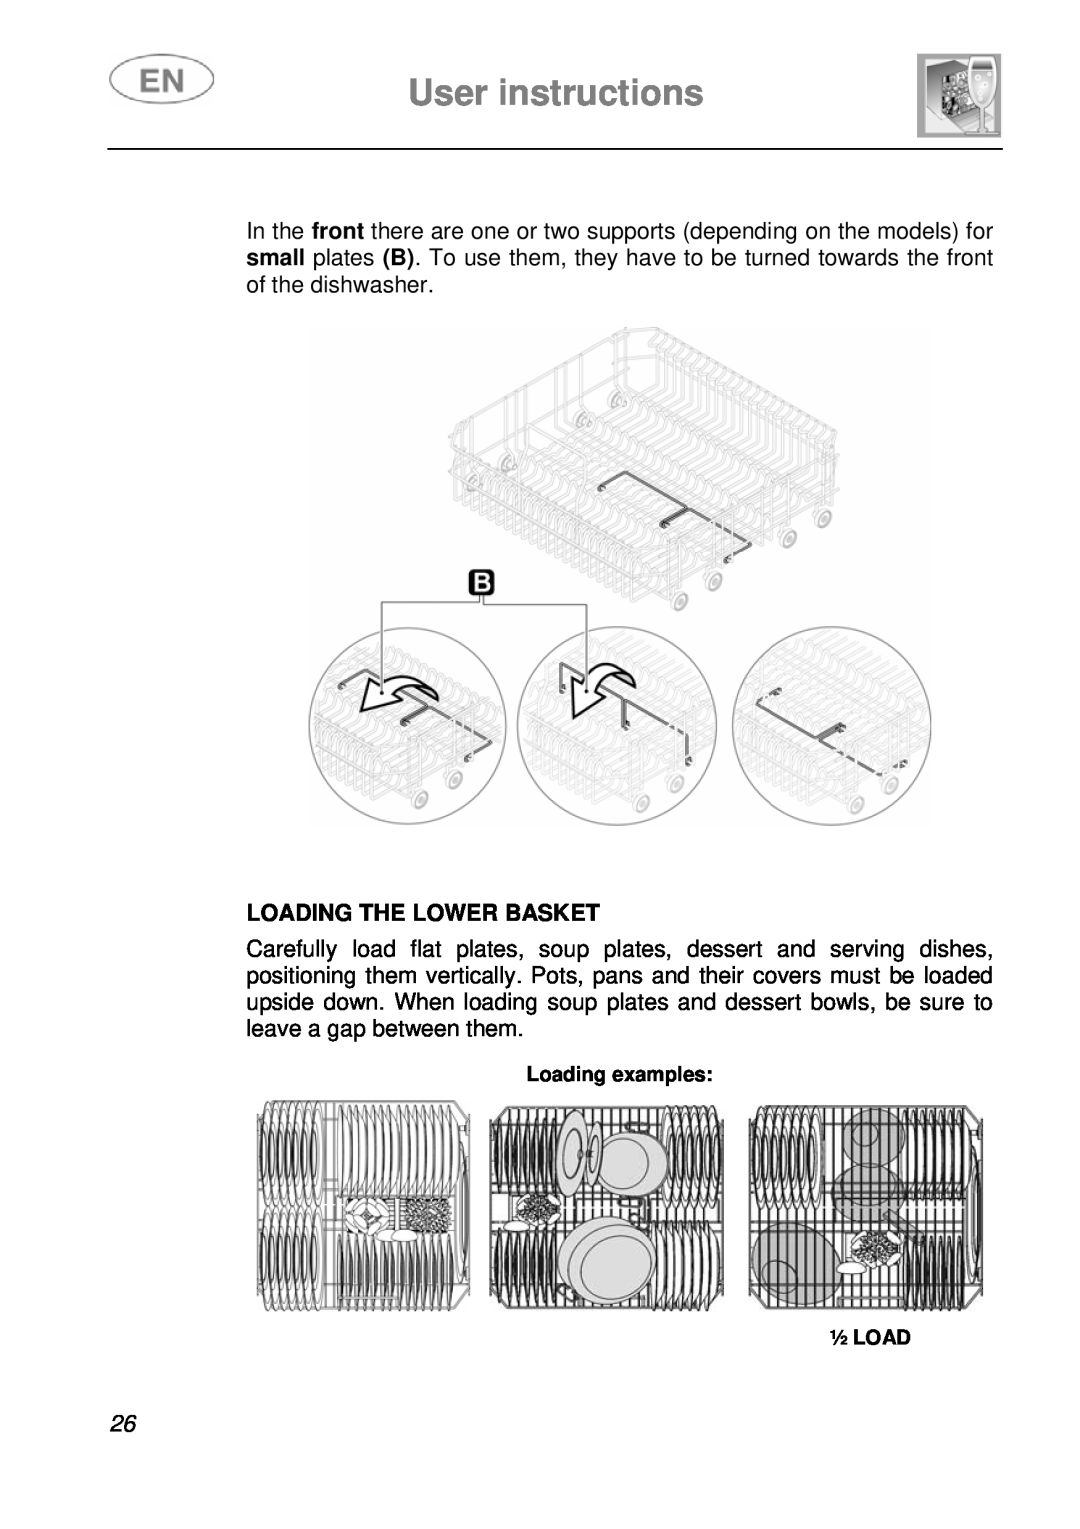 Smeg EN instruction manual Loading The Lower Basket, User instructions, Loading examples ½ LOAD 